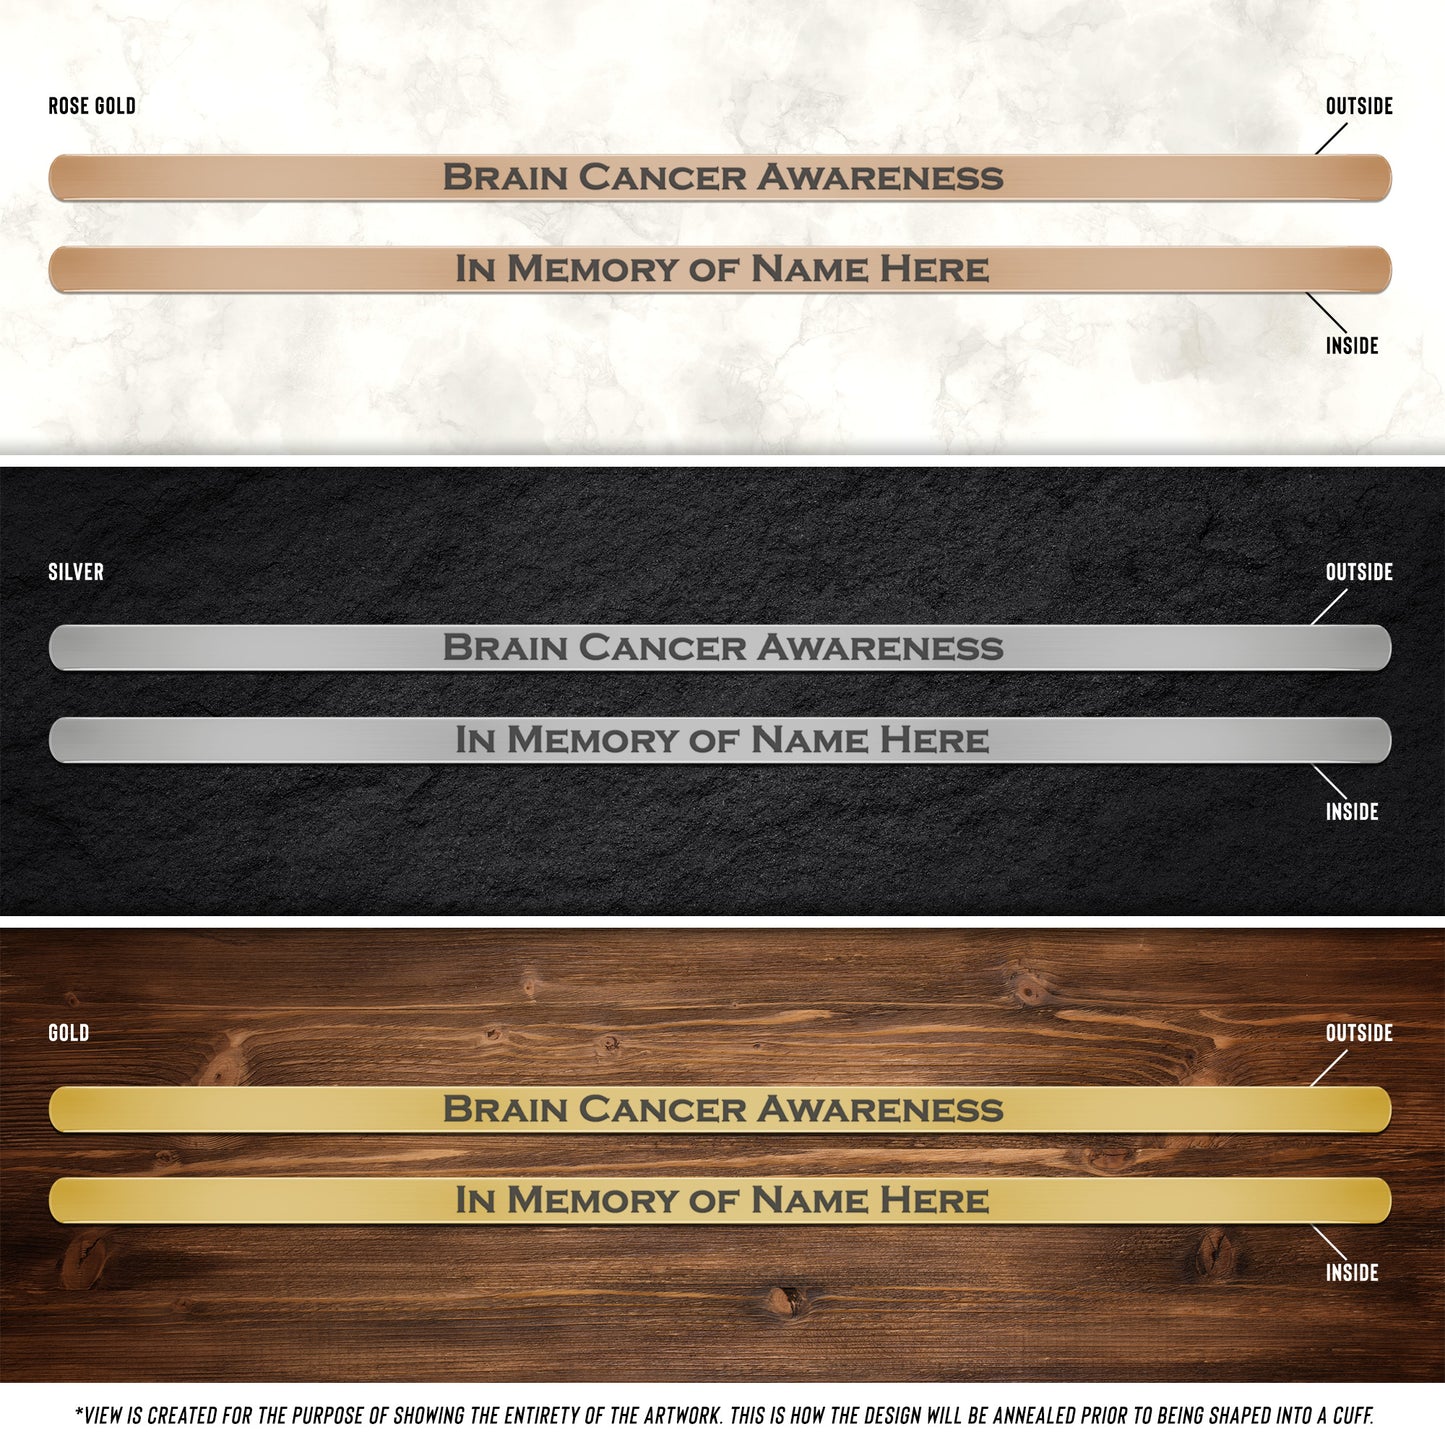 Personalized Brain Cancer Awareness Cuff Bracelet